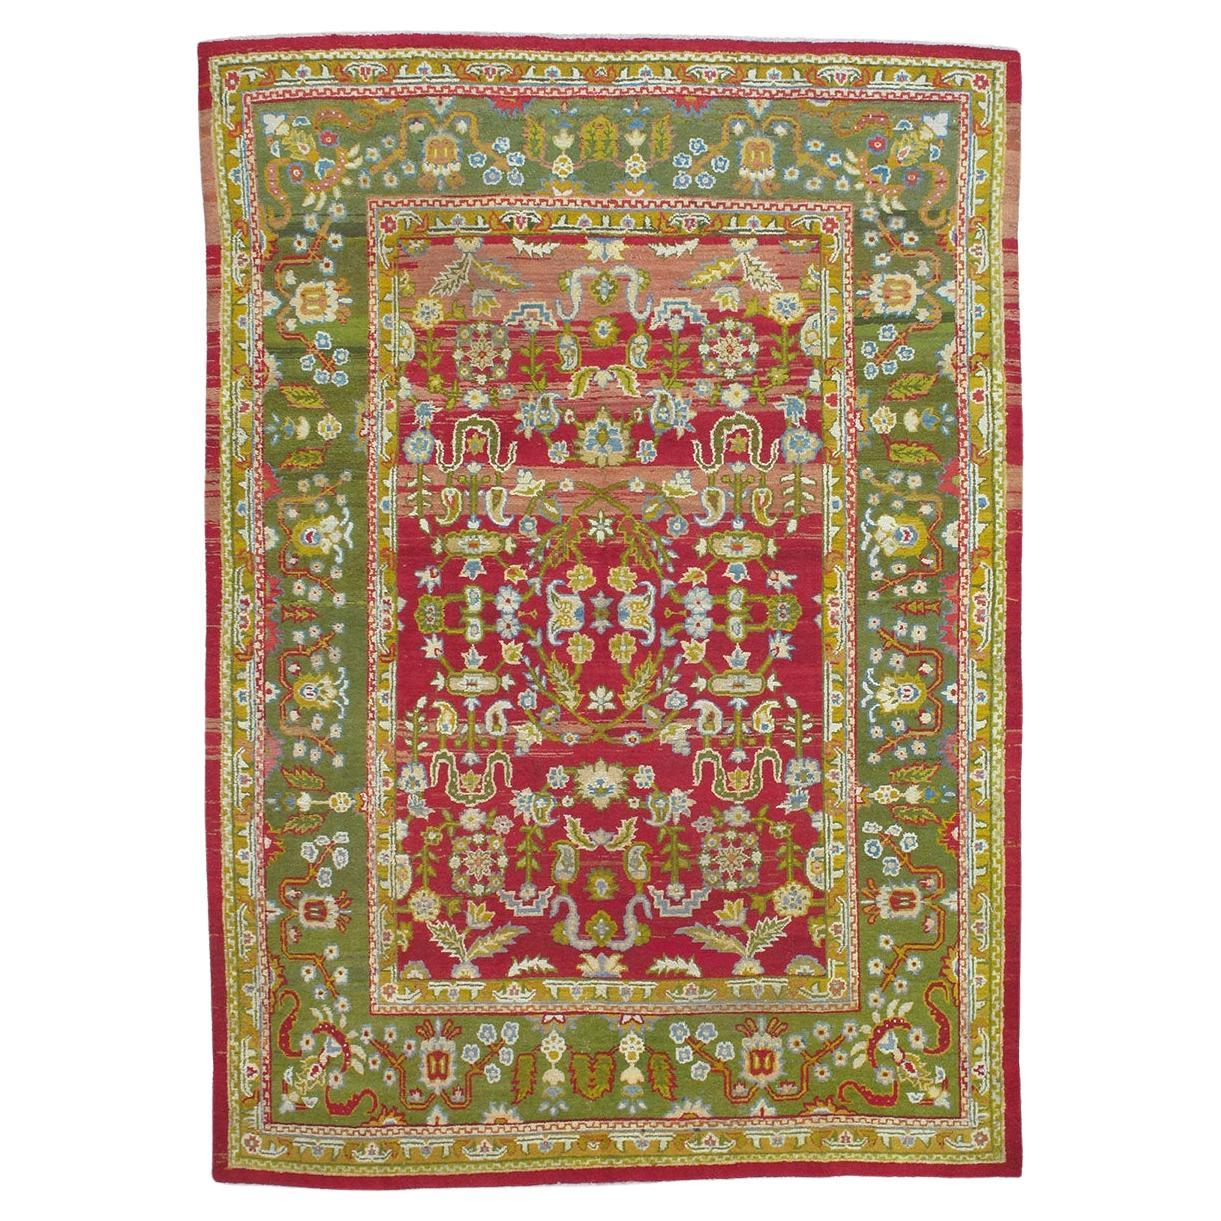 Antique Amritsar Carpet (DK-110-1)